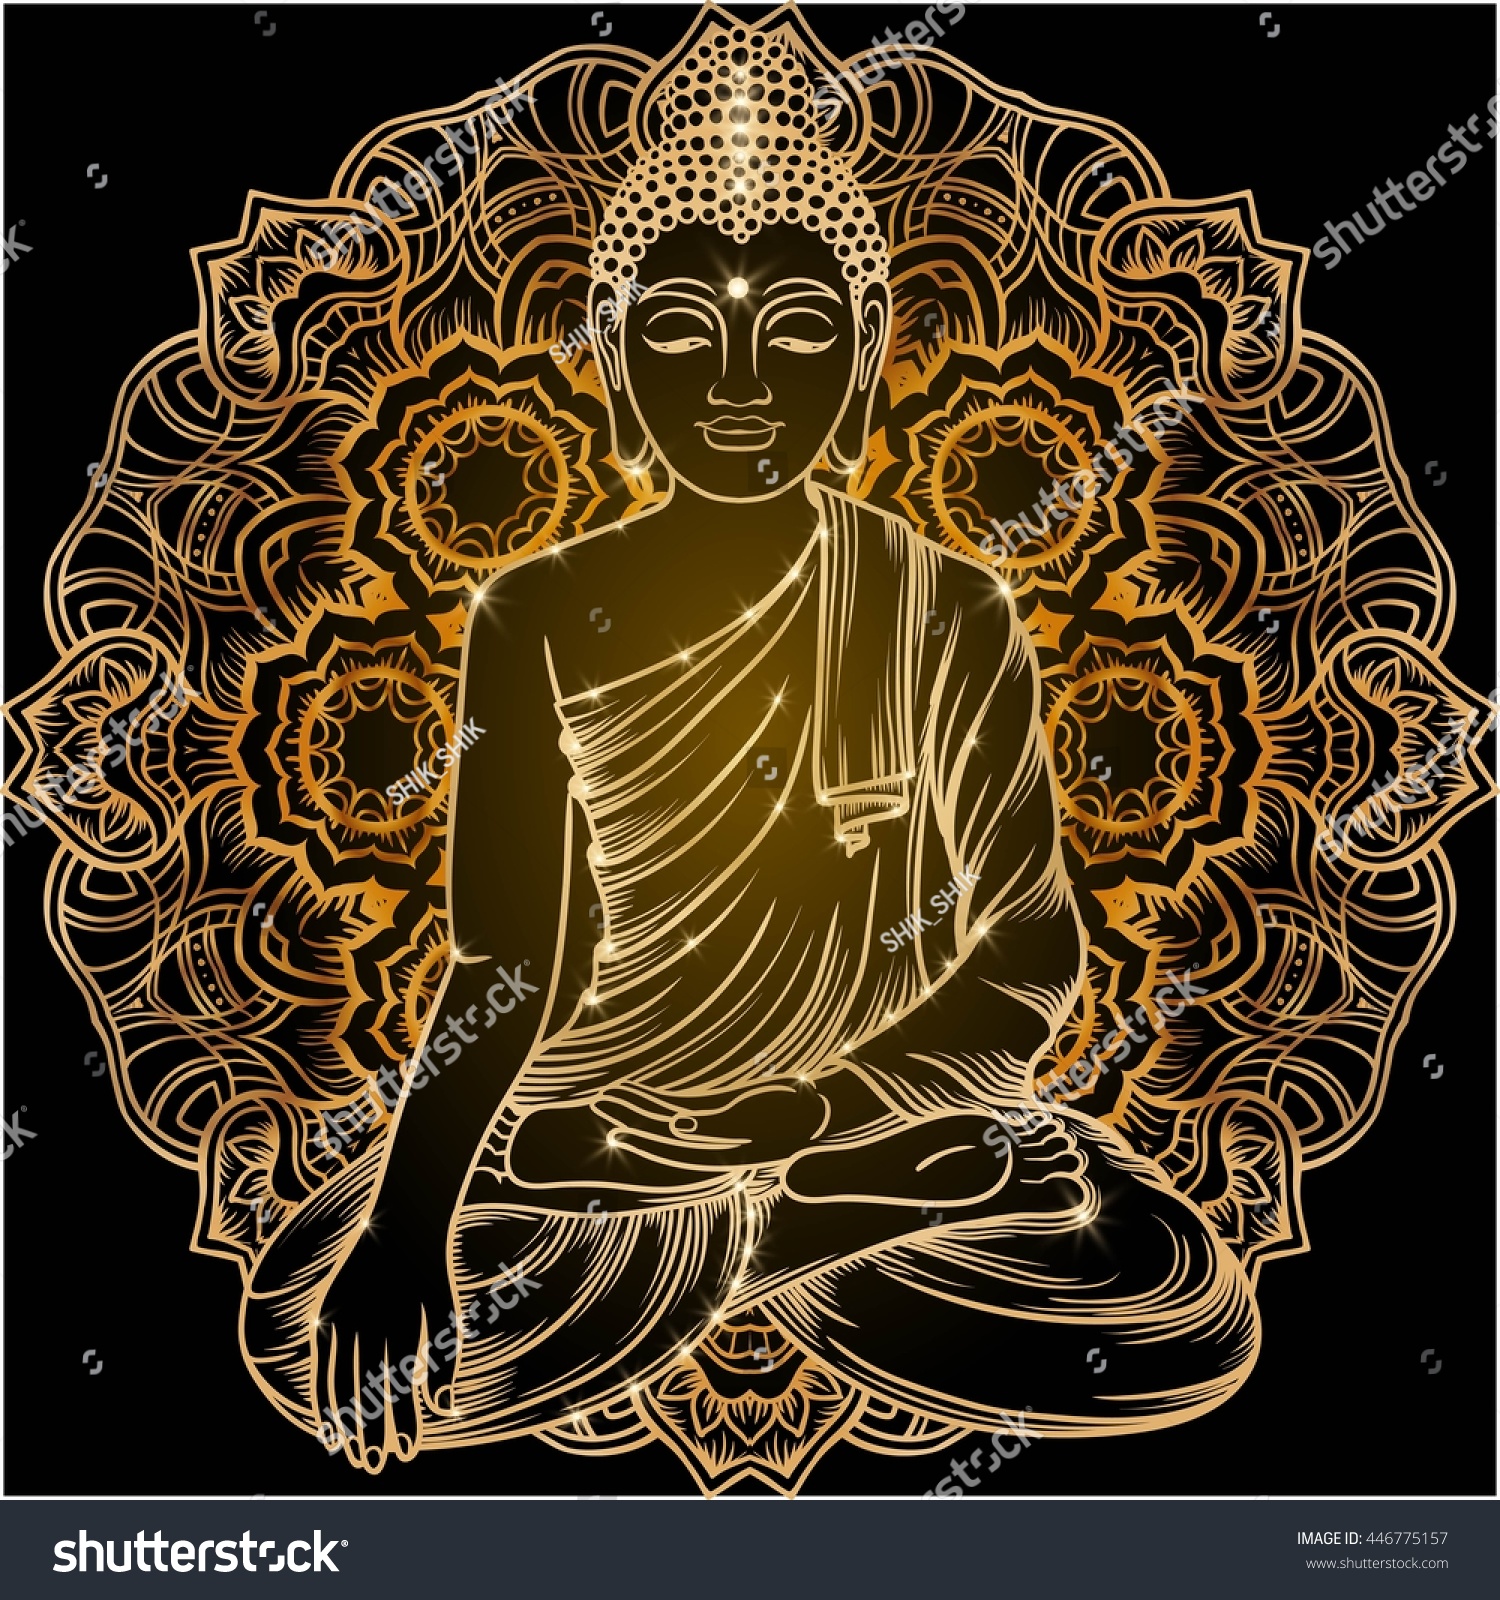 Download Sitting Buddha Over Ornate Mandala Round Stock Vector ...